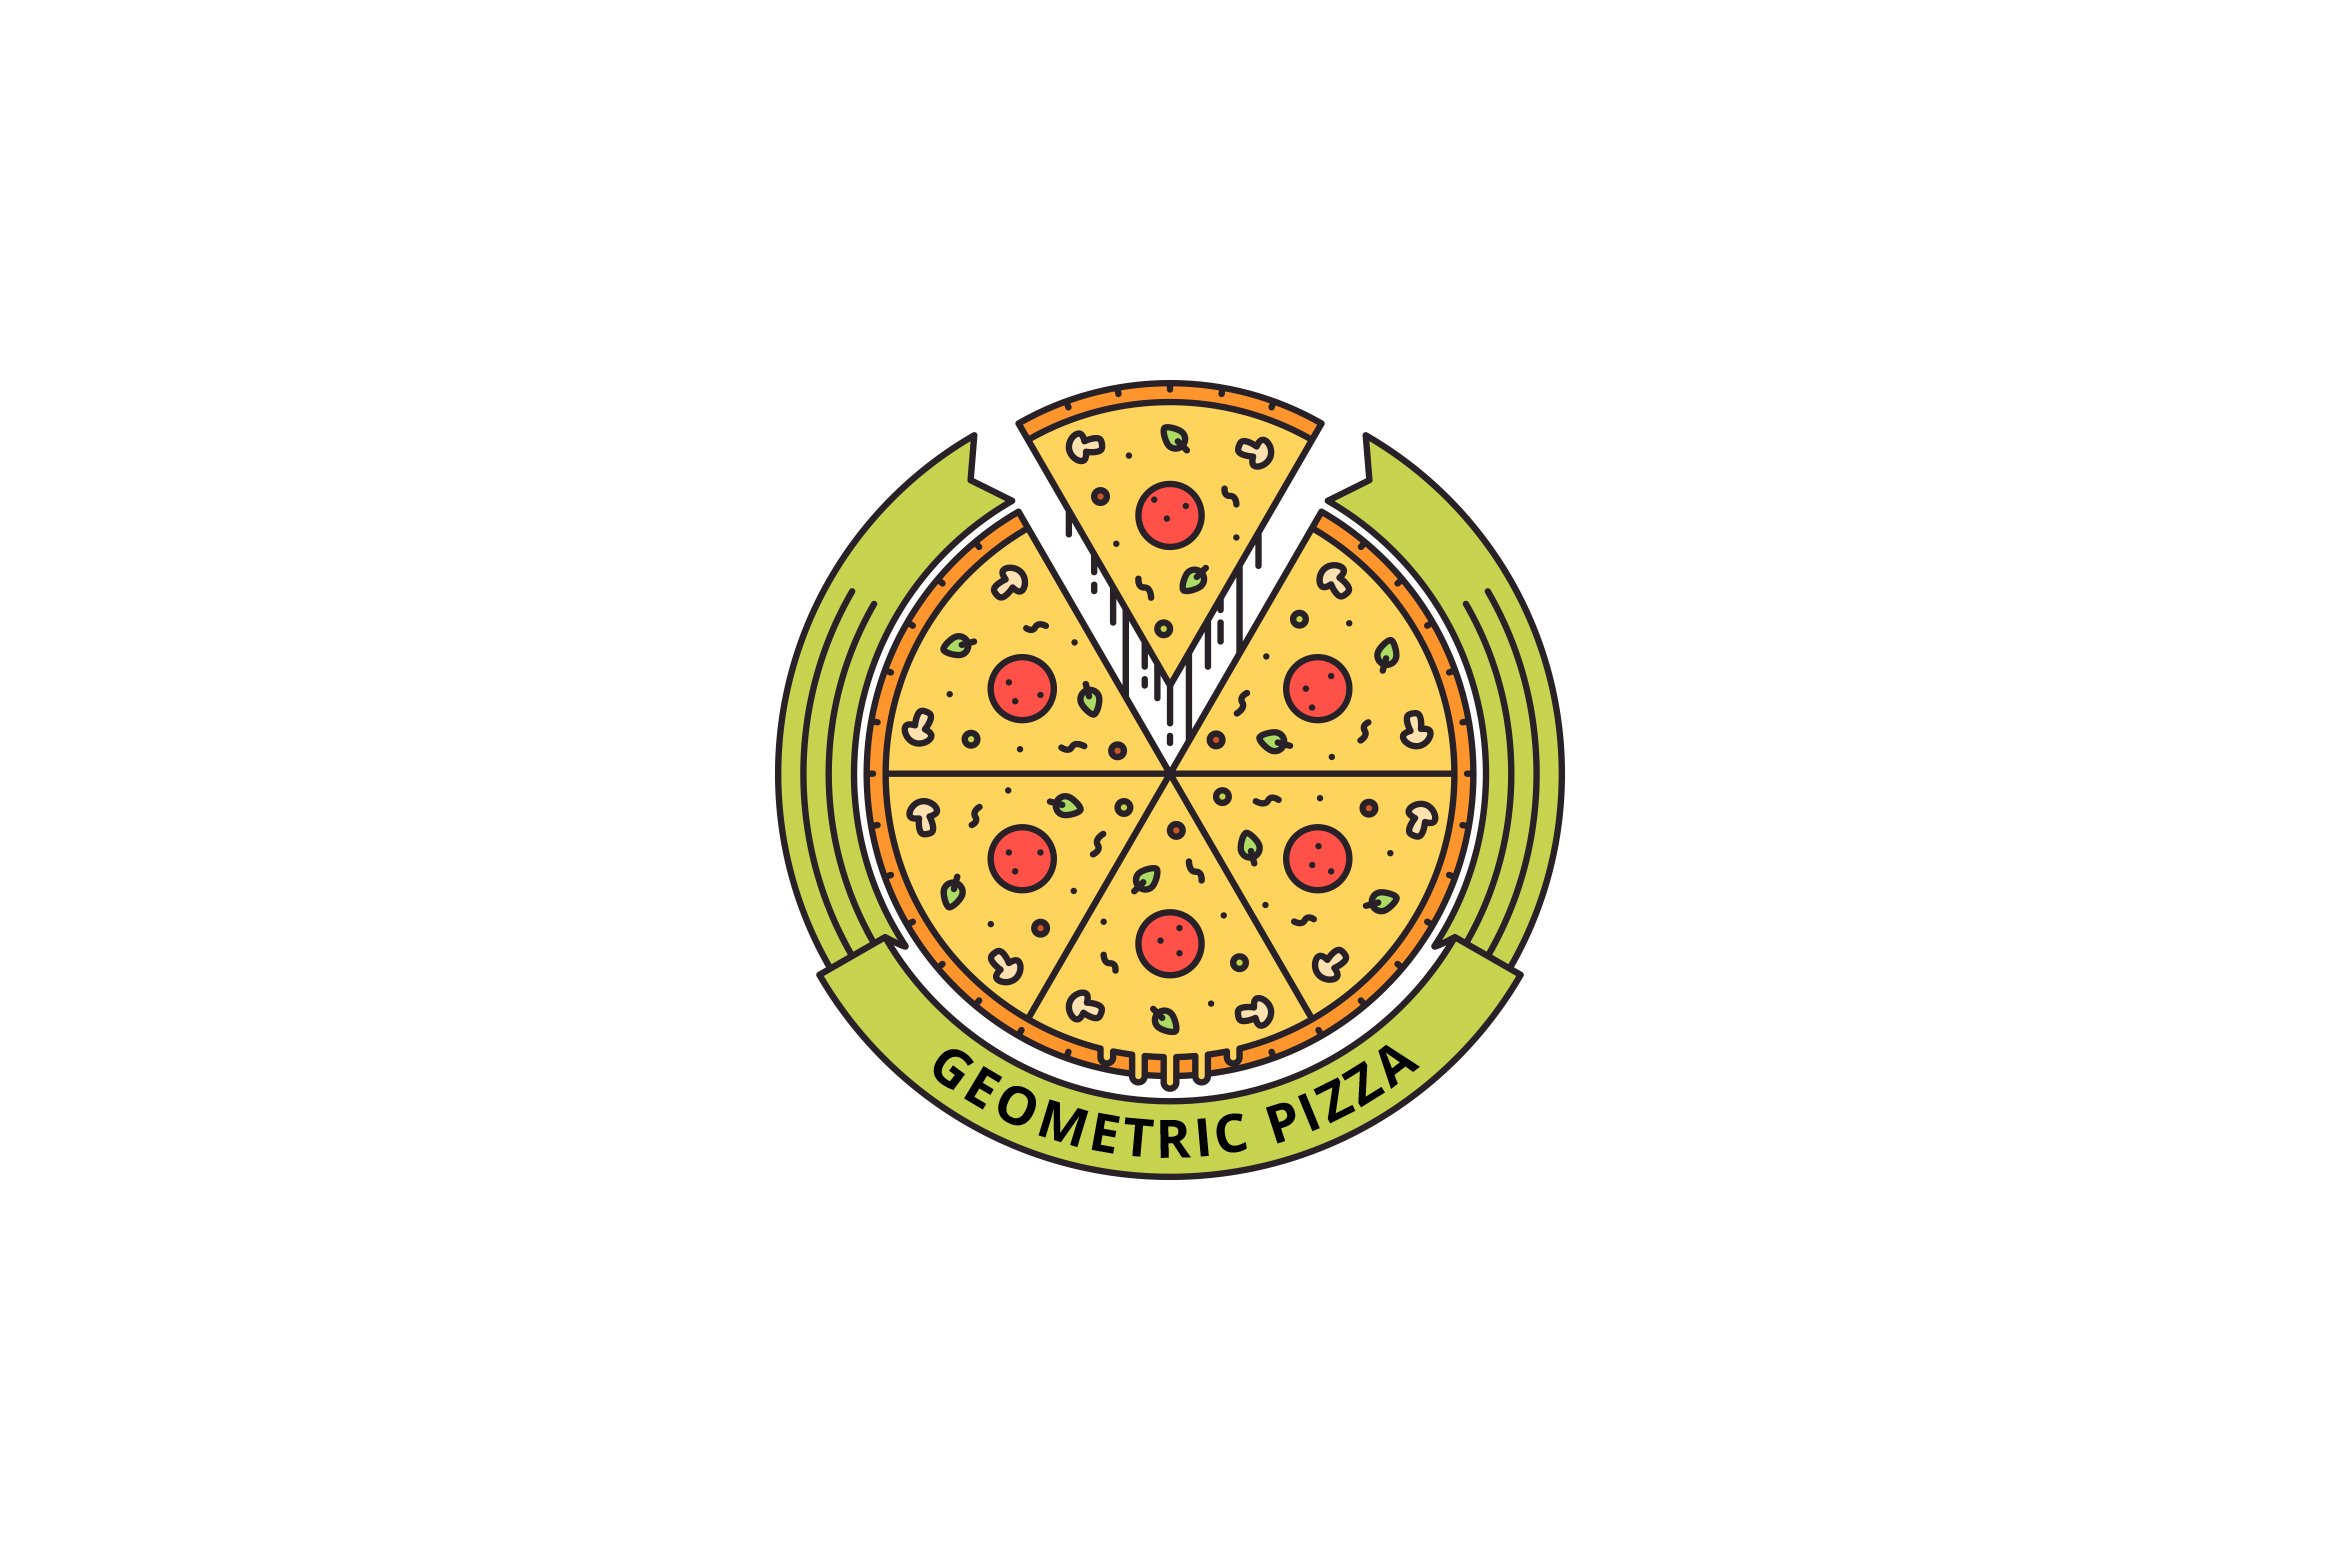 Geometric Pizza Logo cover image.